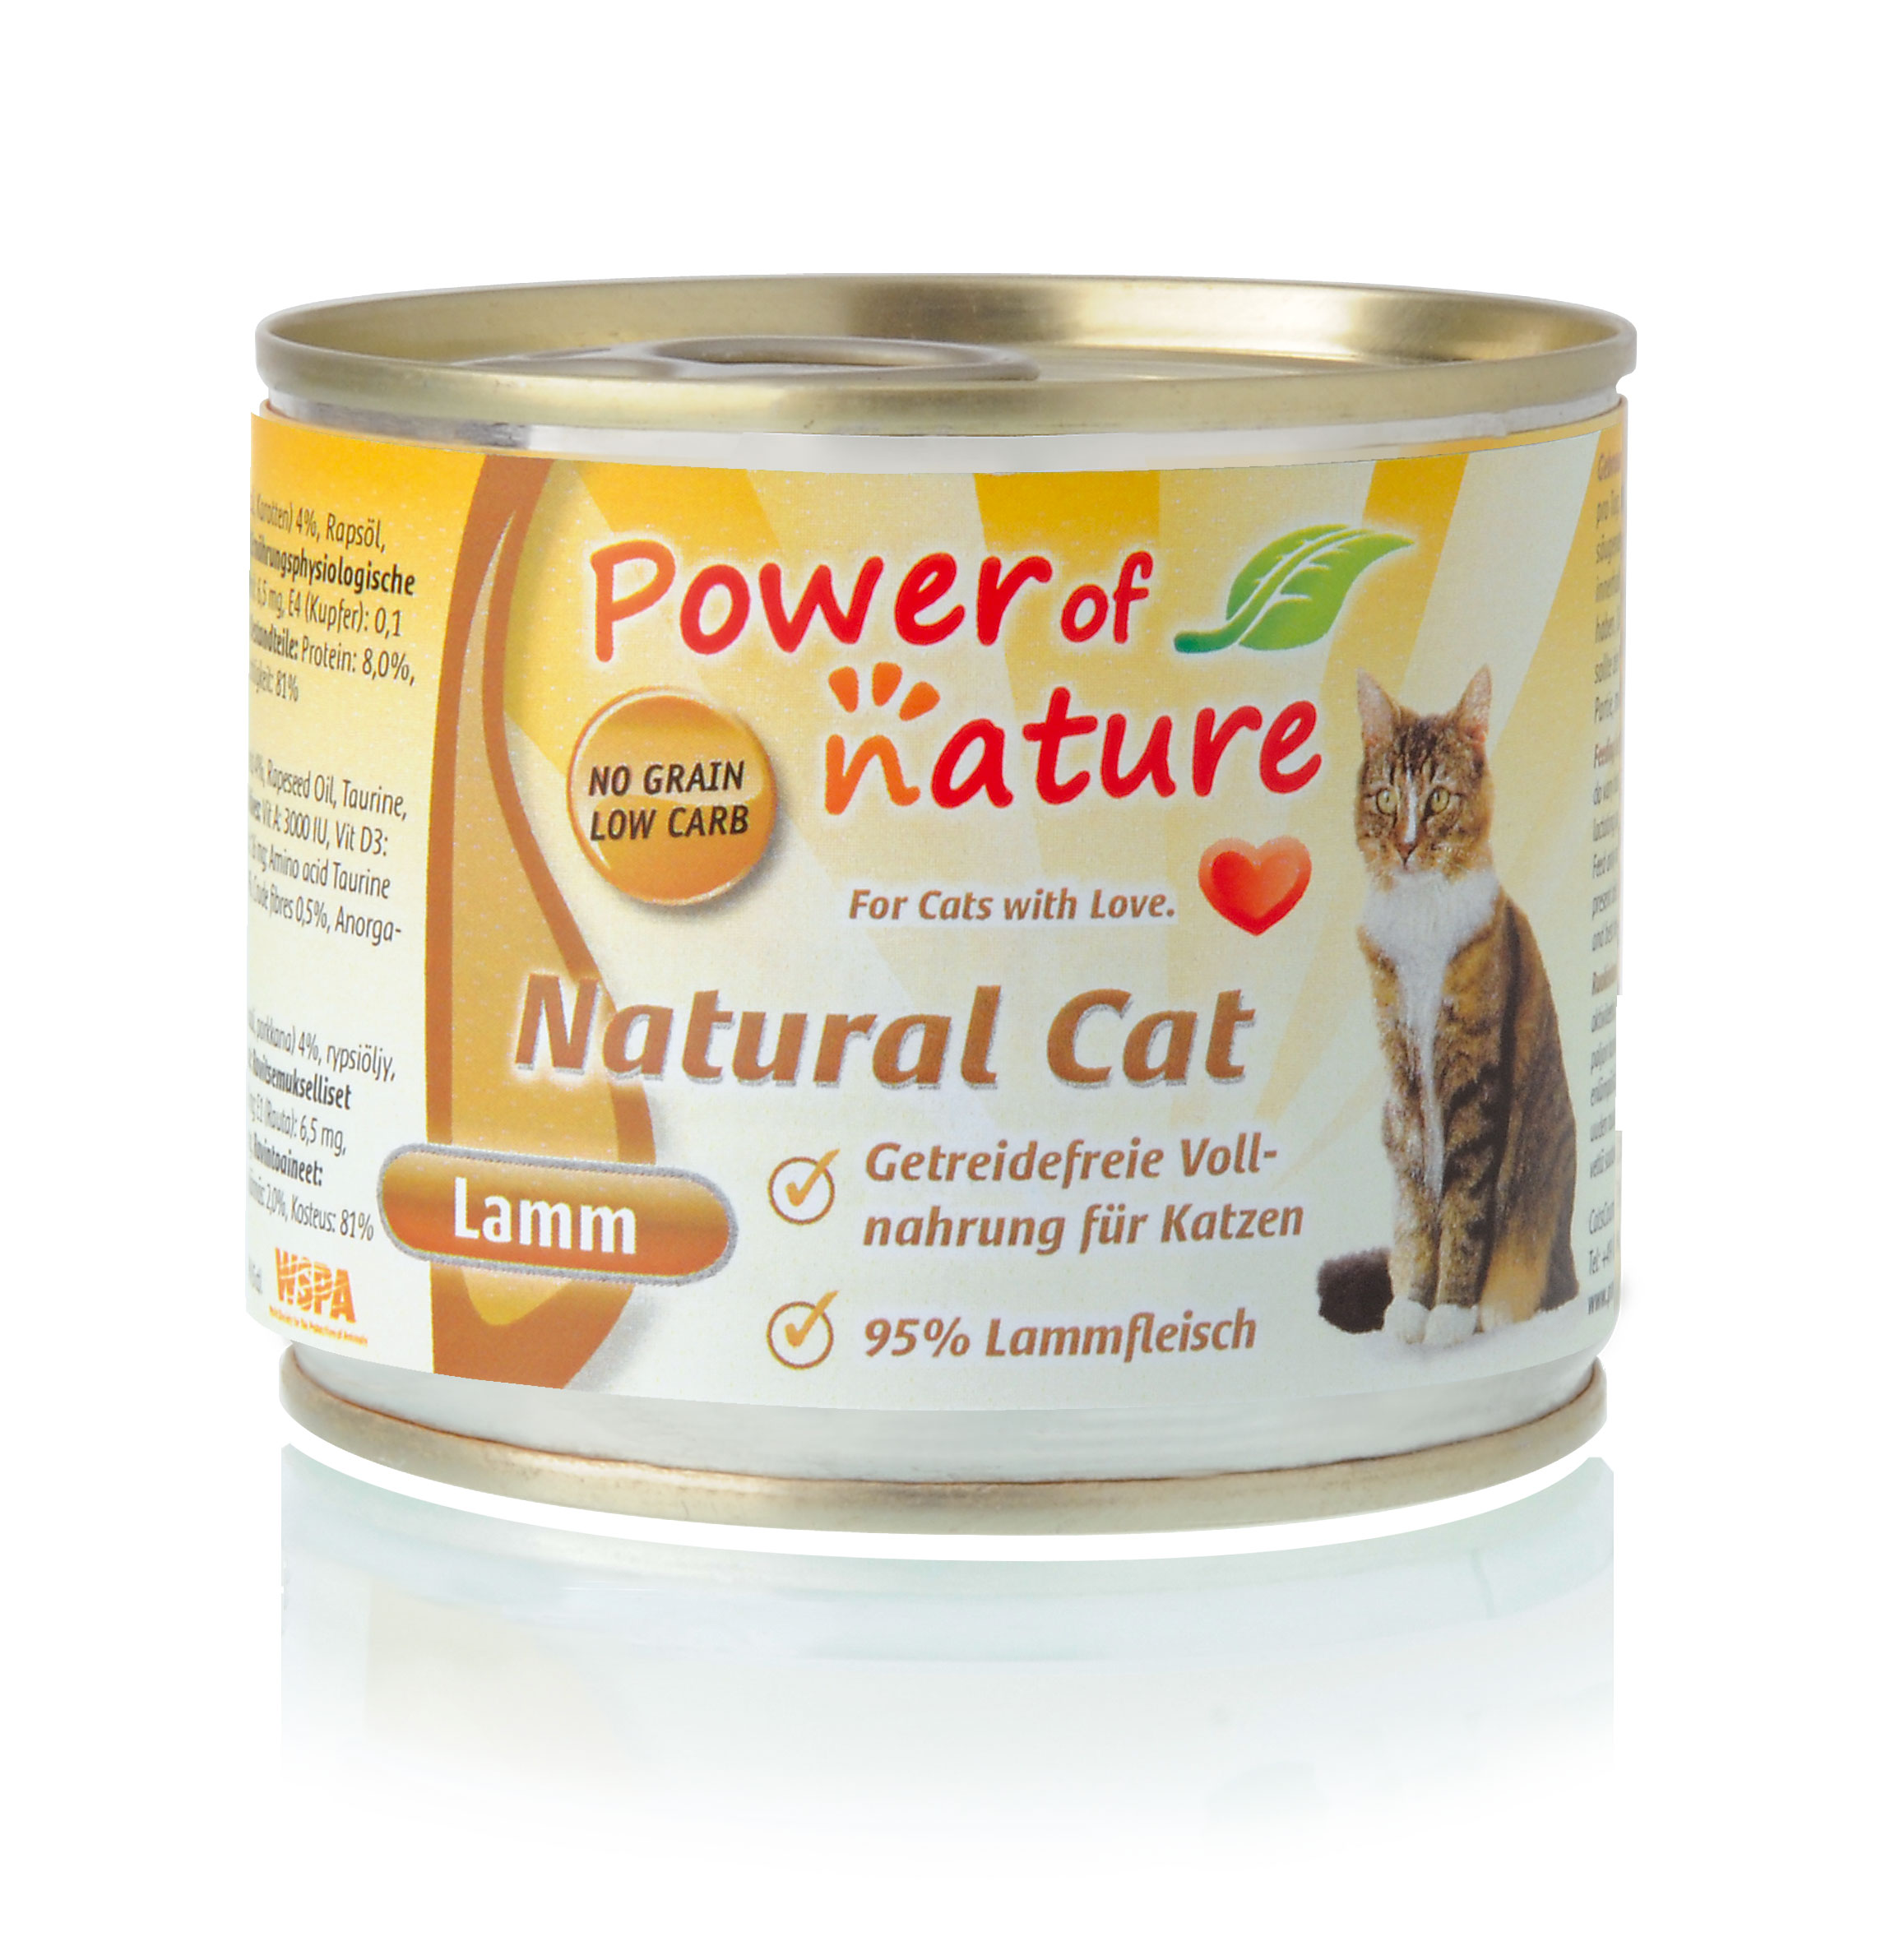 Power of Nature Natural Cat Dose Lamm 24 x 200g